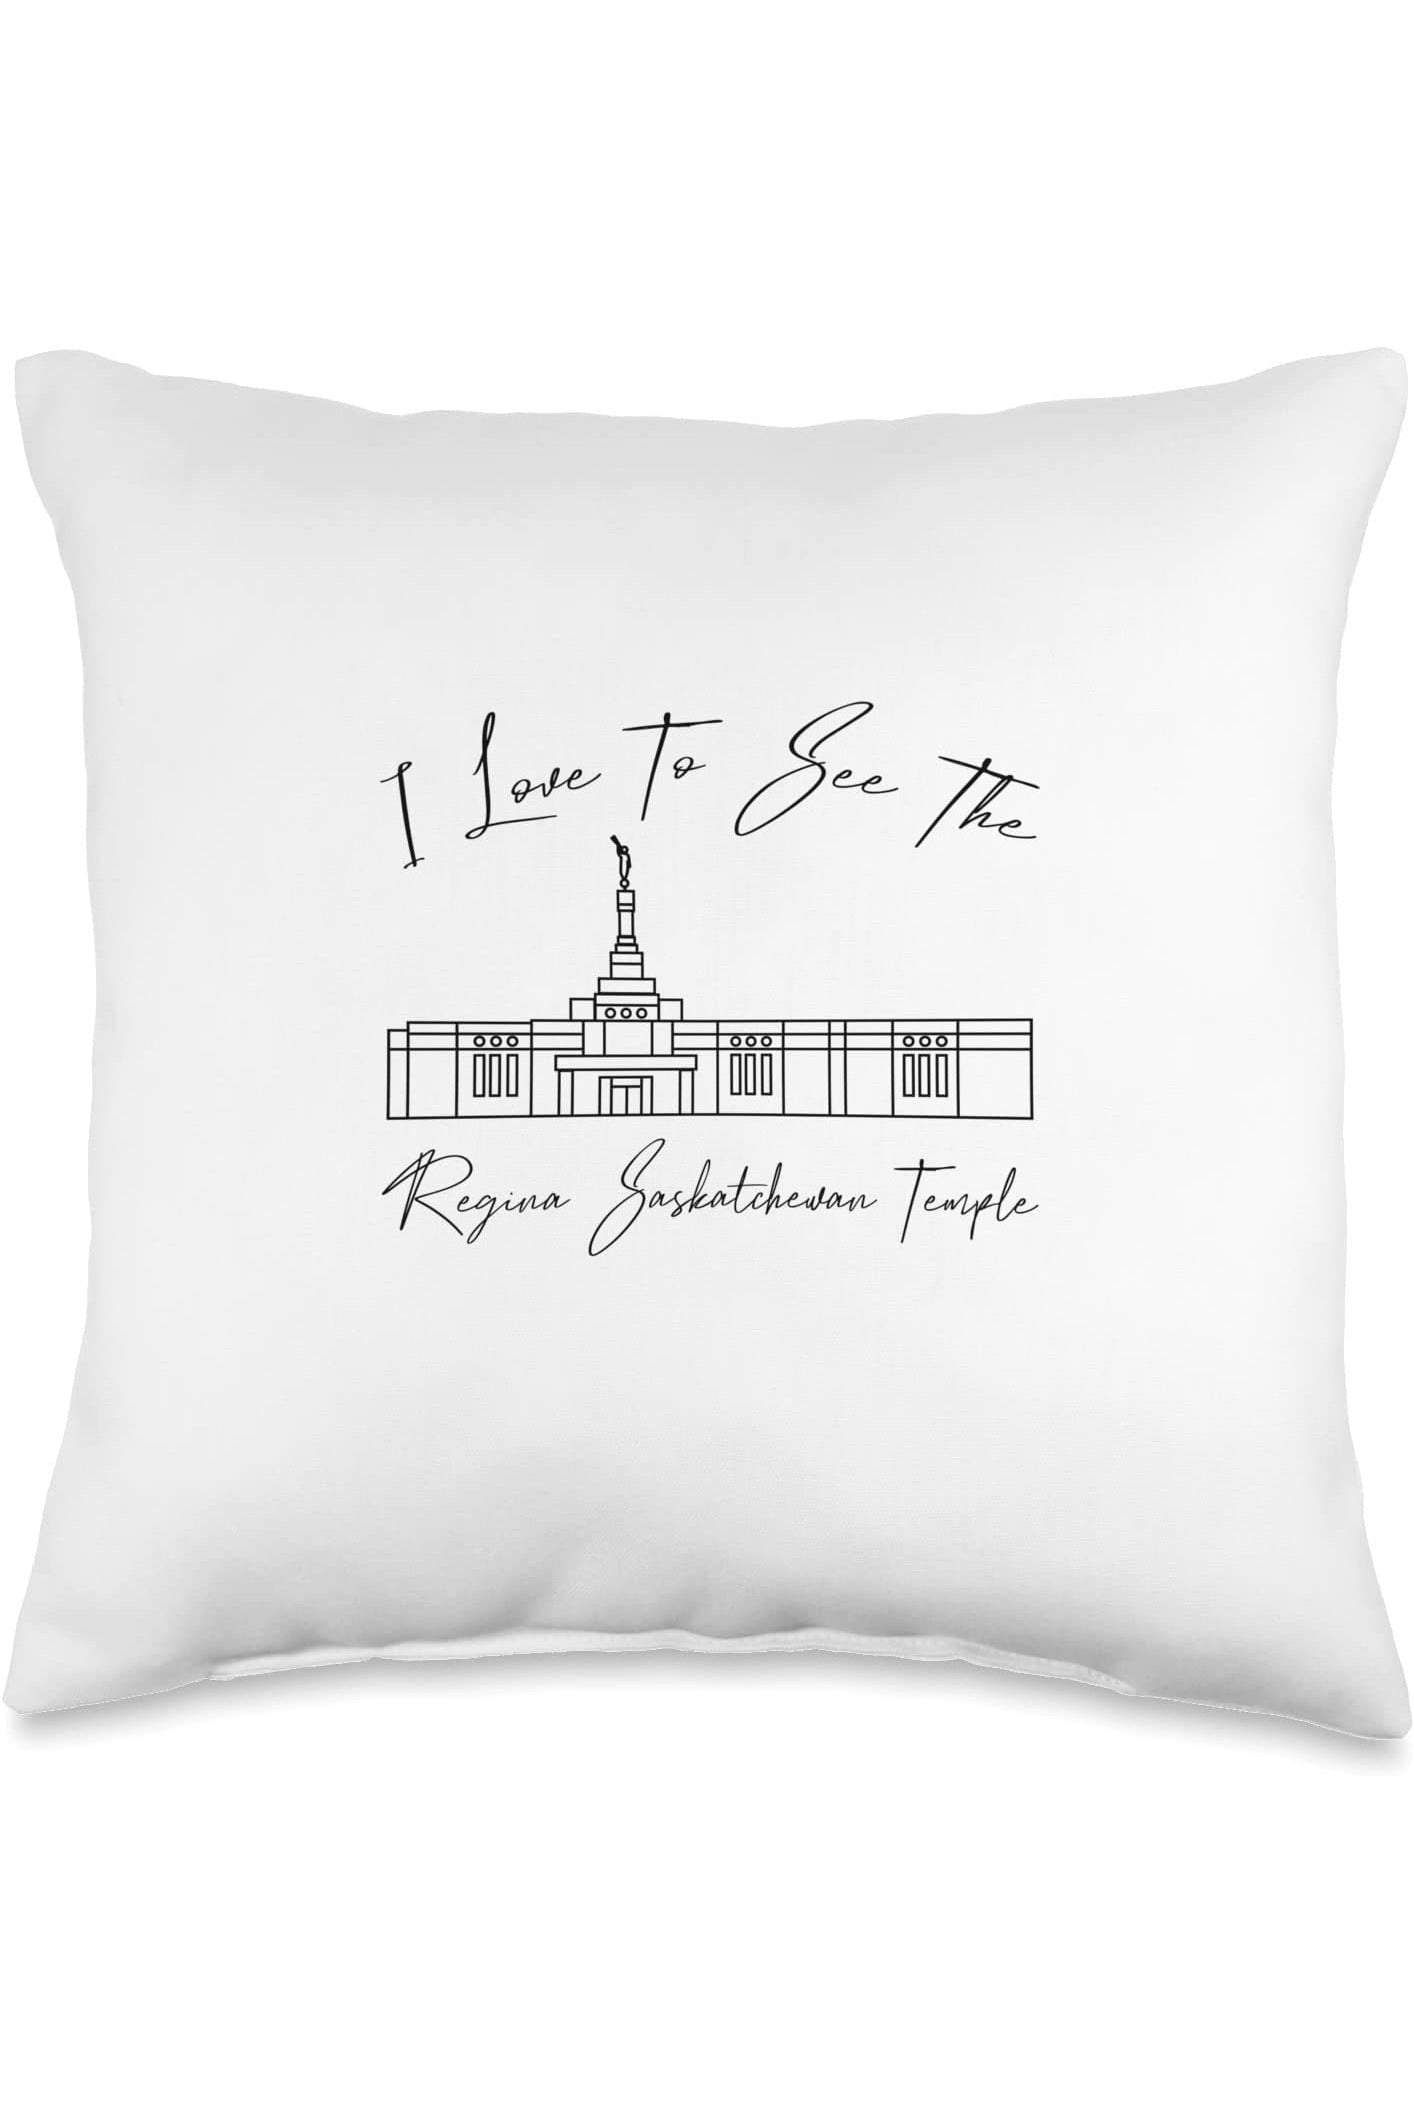 Regina Saskatchewan Temple Throw Pillows - Calligraphy Style (English) US